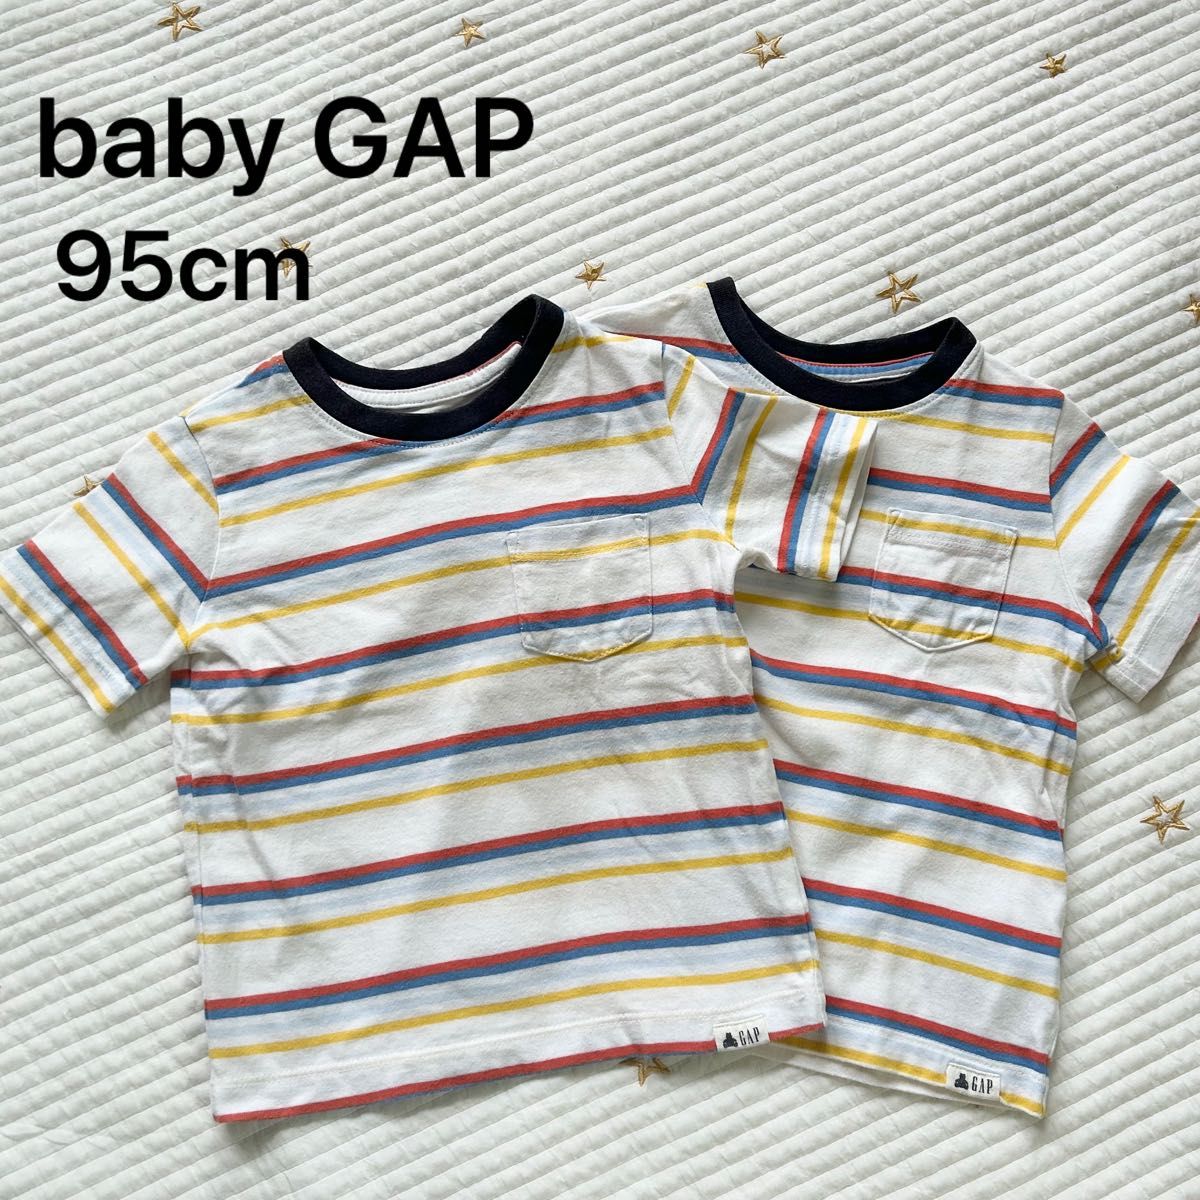 baby GAP 半袖Tシャツ 2years 95cm 2枚組 ボーダー